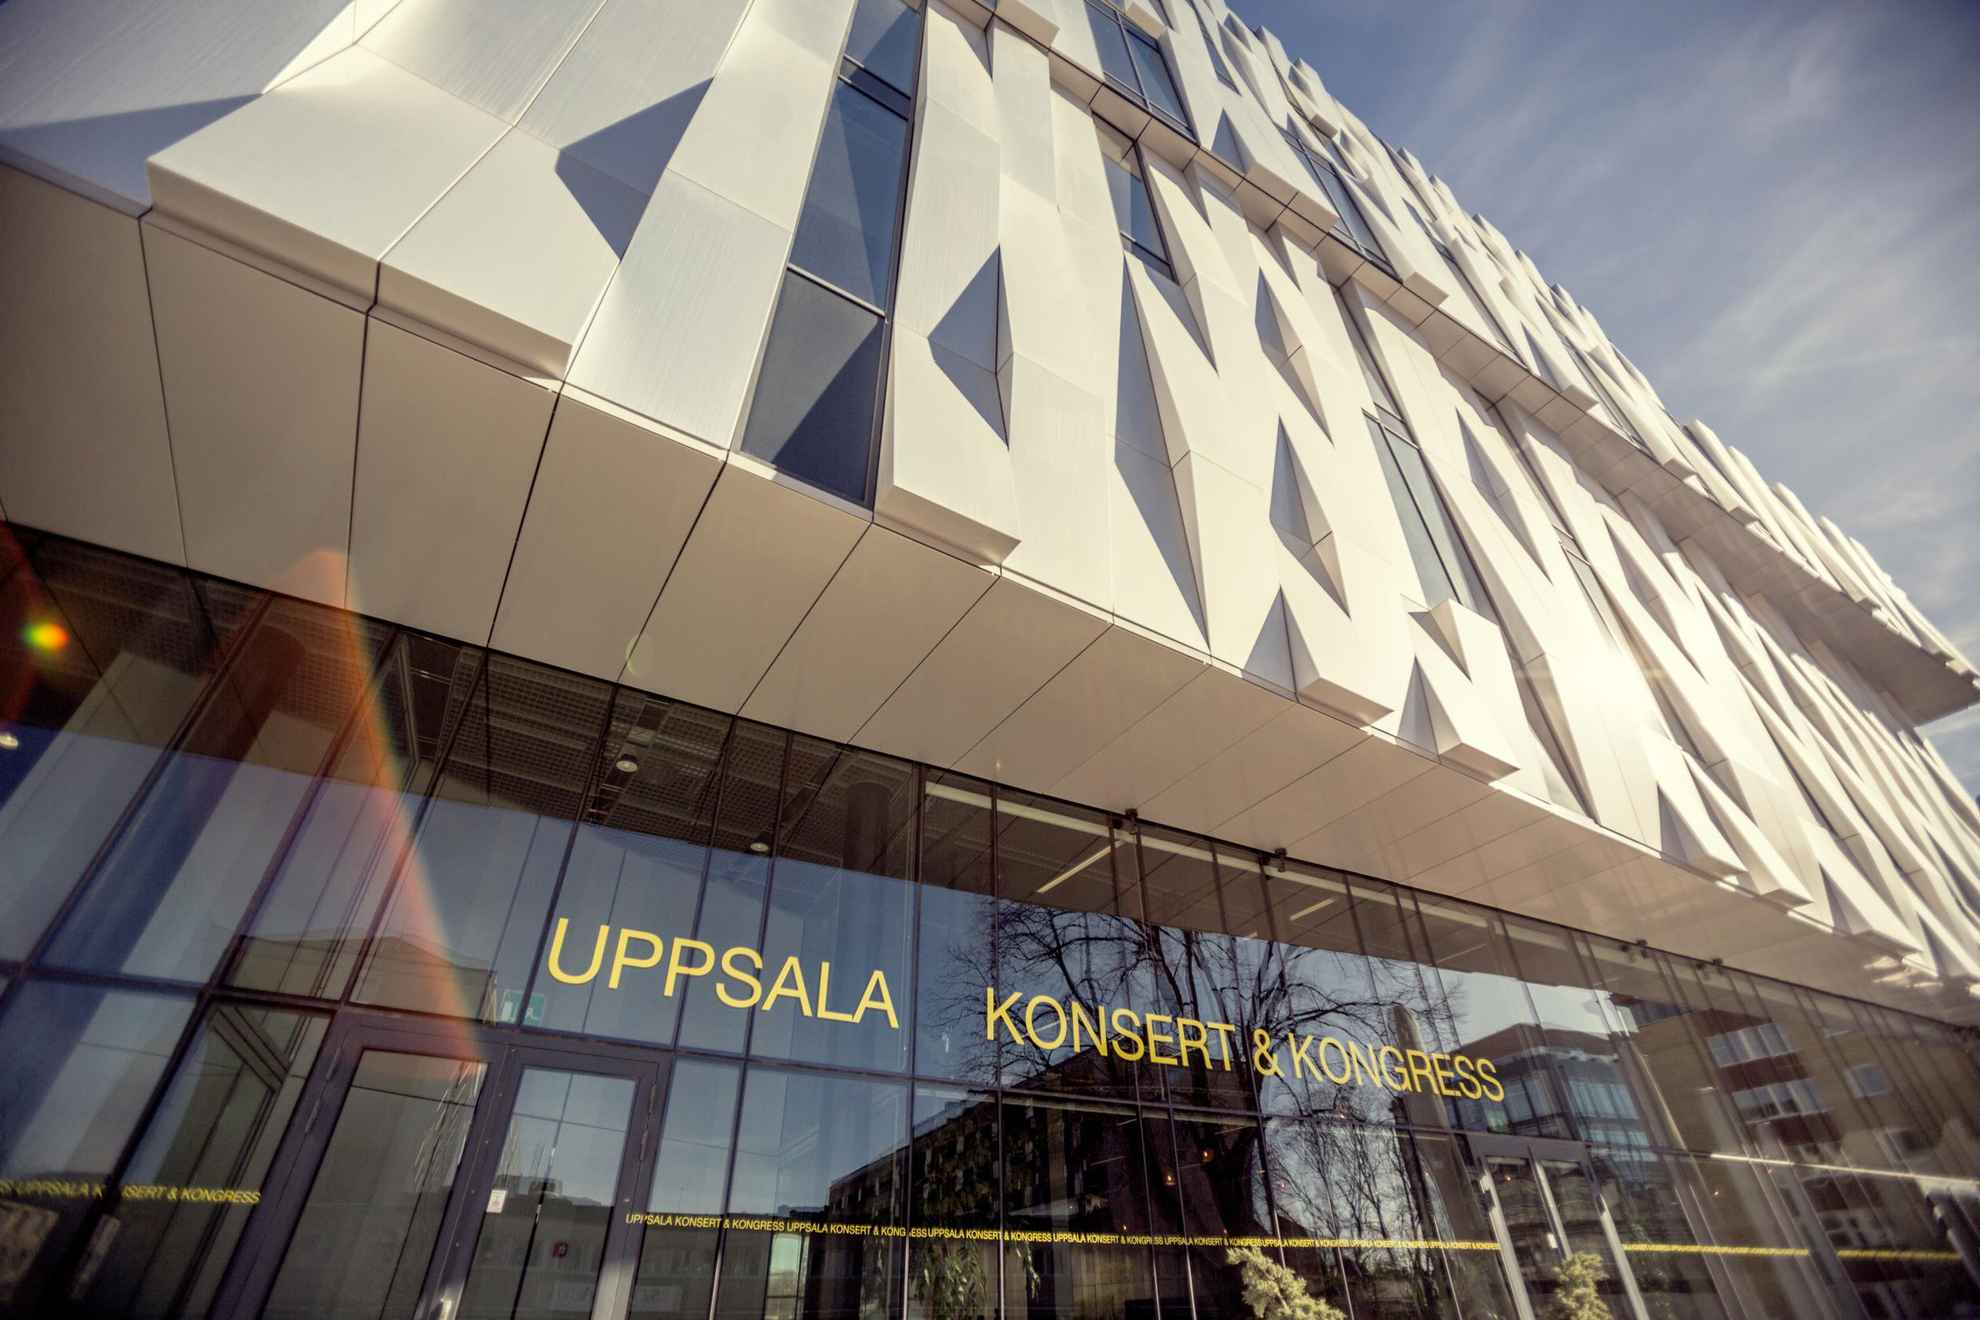 Uppsala Concert & Congress